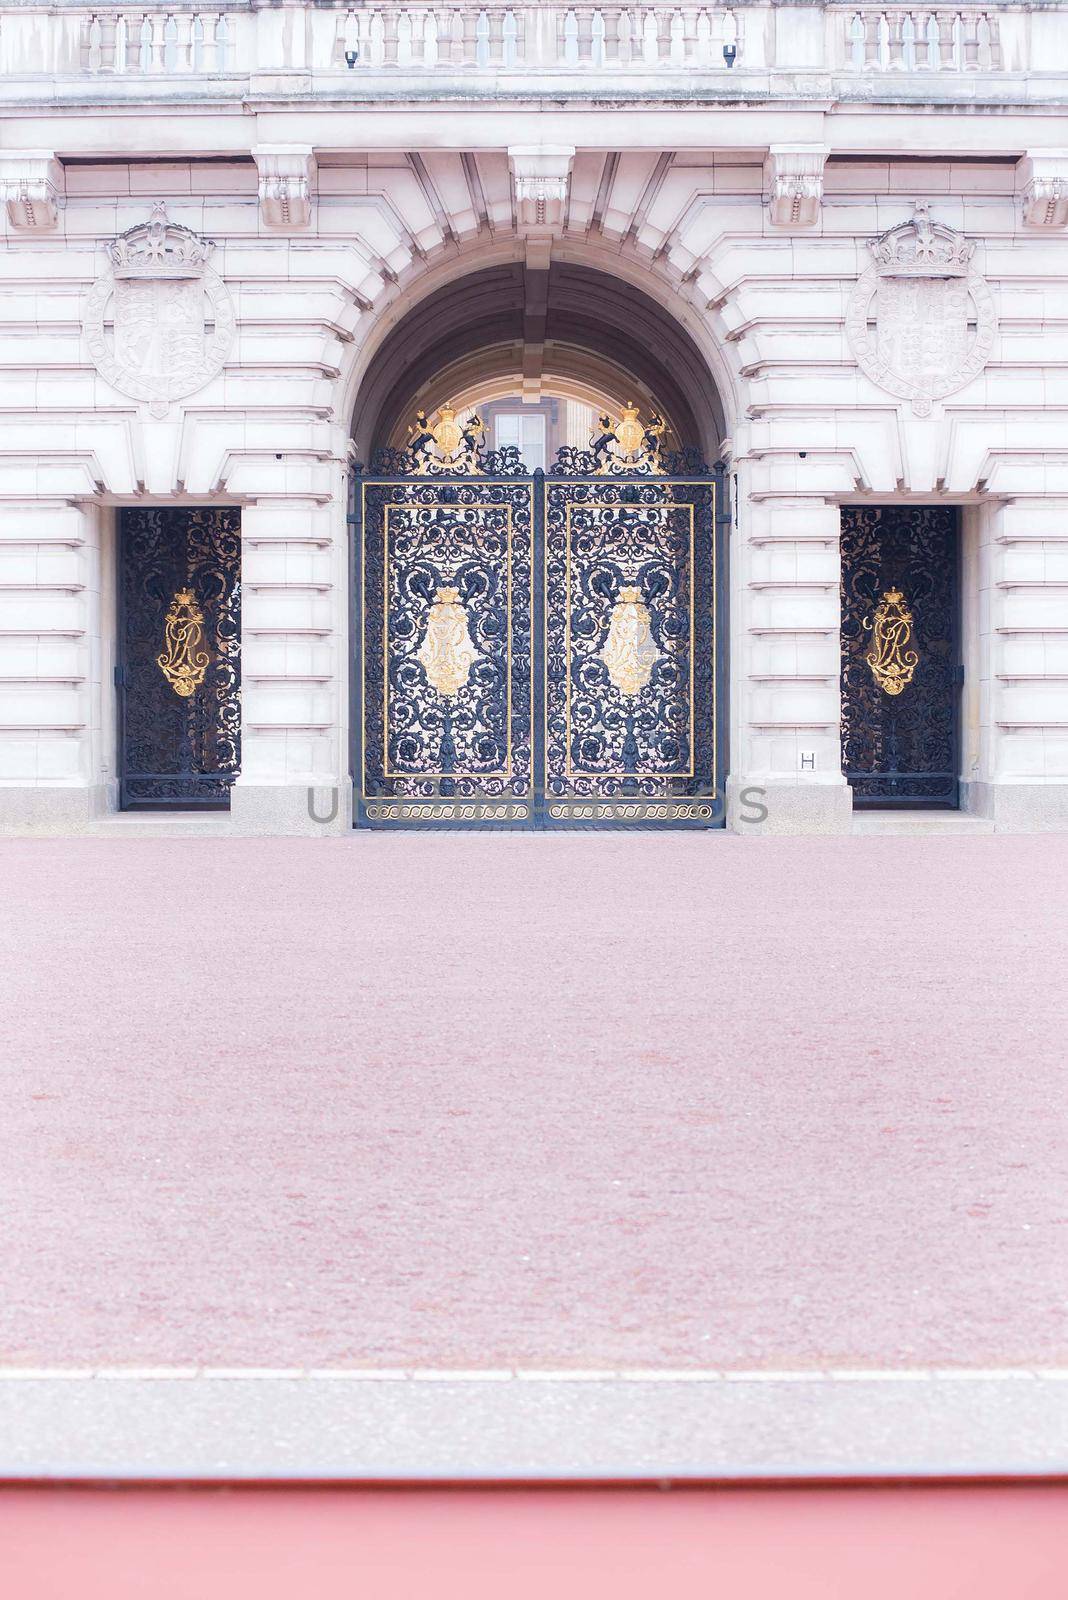 Buckingham Palace's gates and beautiful royal architecture by jyurinko